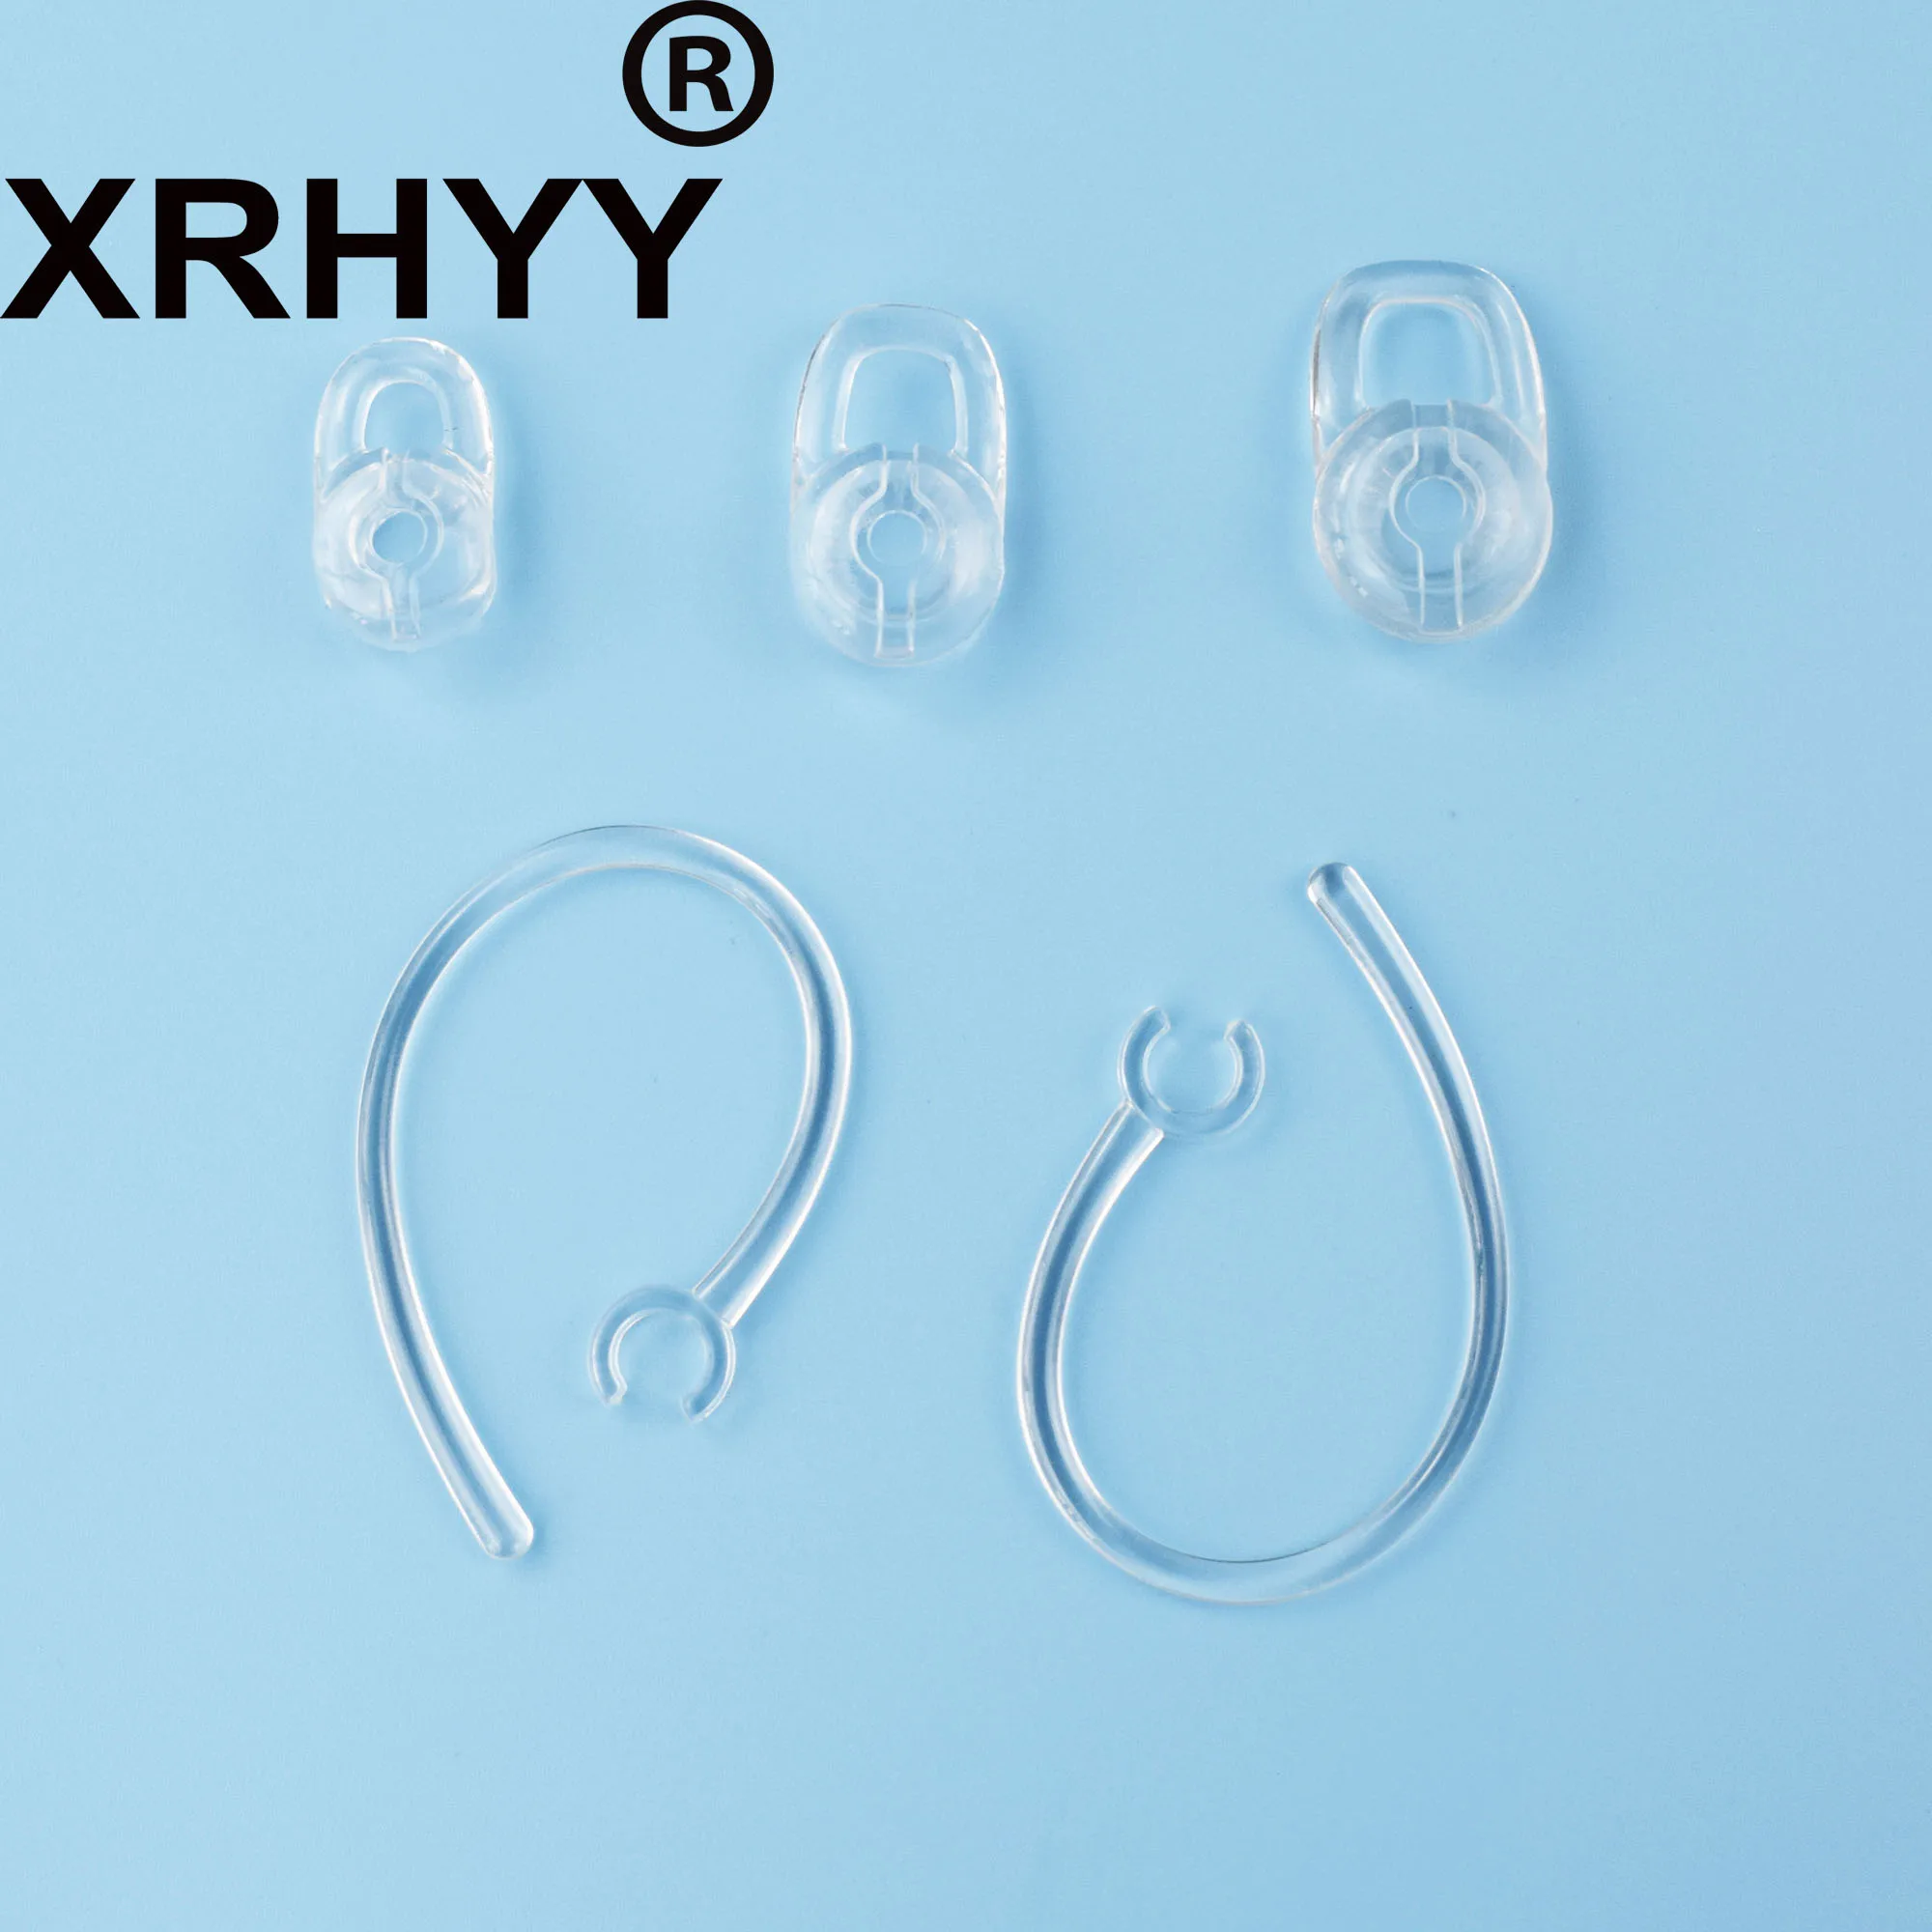 XRHYY 6 компл. s m l наушники 2 упаковка для Plantronic s m arque M155 и 2M165 Bluetooth беспроводной Savor M1100 M100 M55 M28 M25 гарнитура